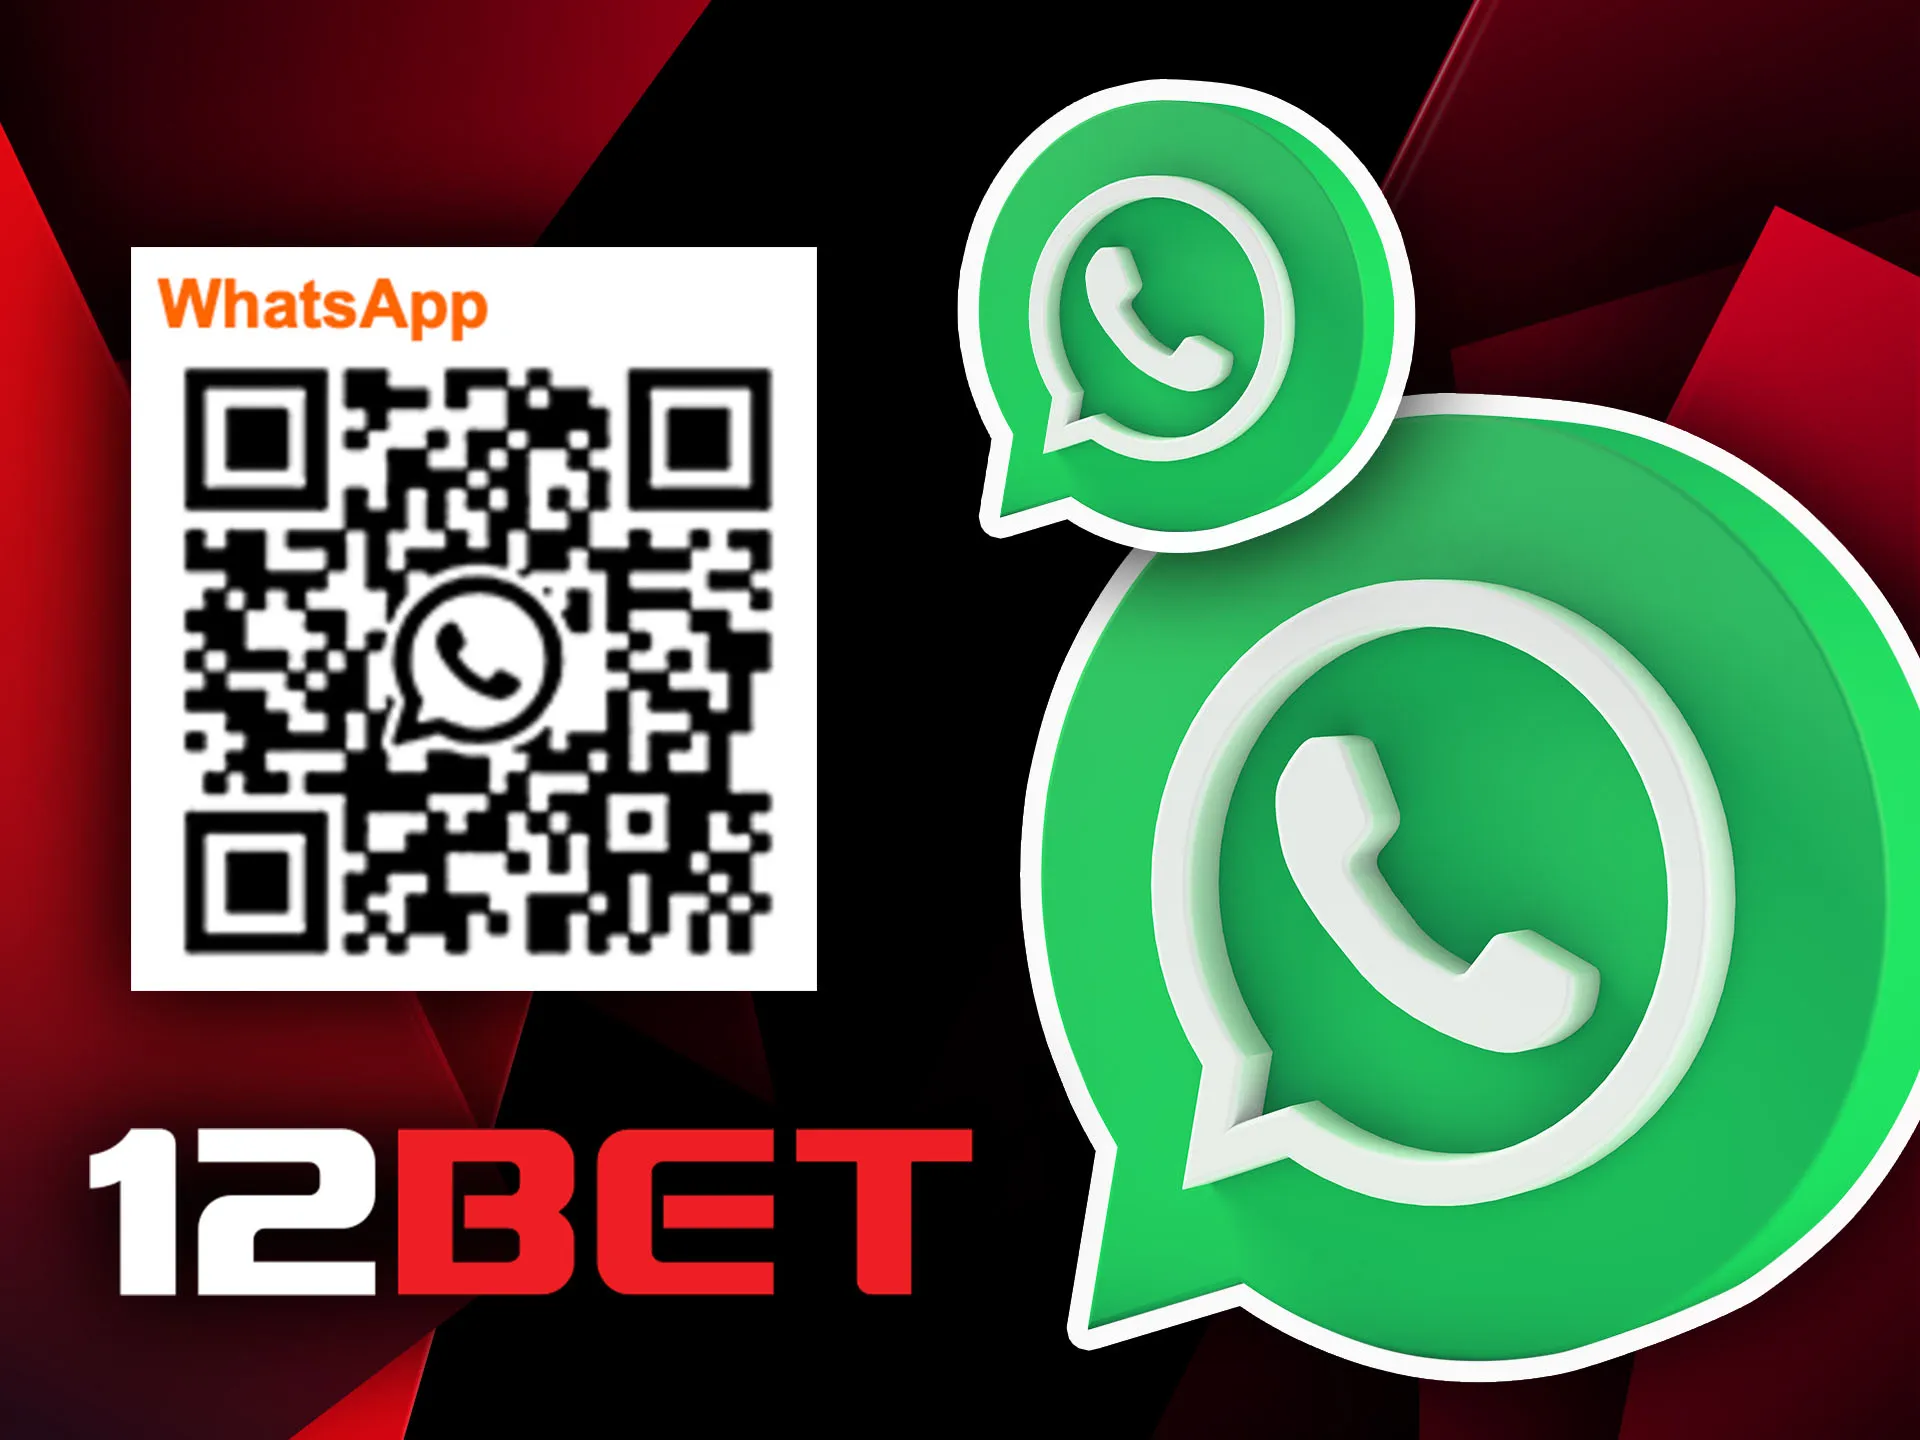 Contact 12bet support via WhatsApp.